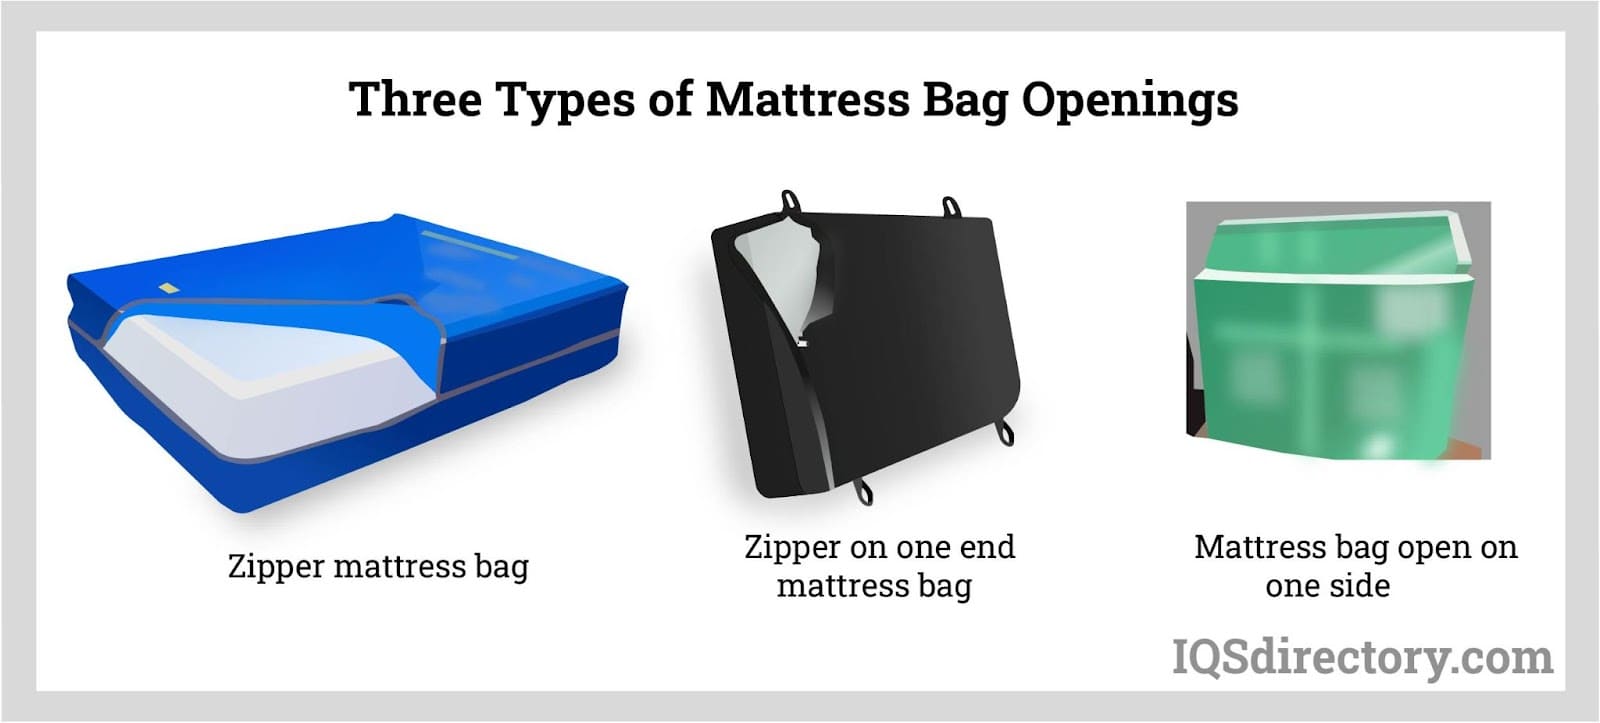 Three Types of Mattress Bag Openings